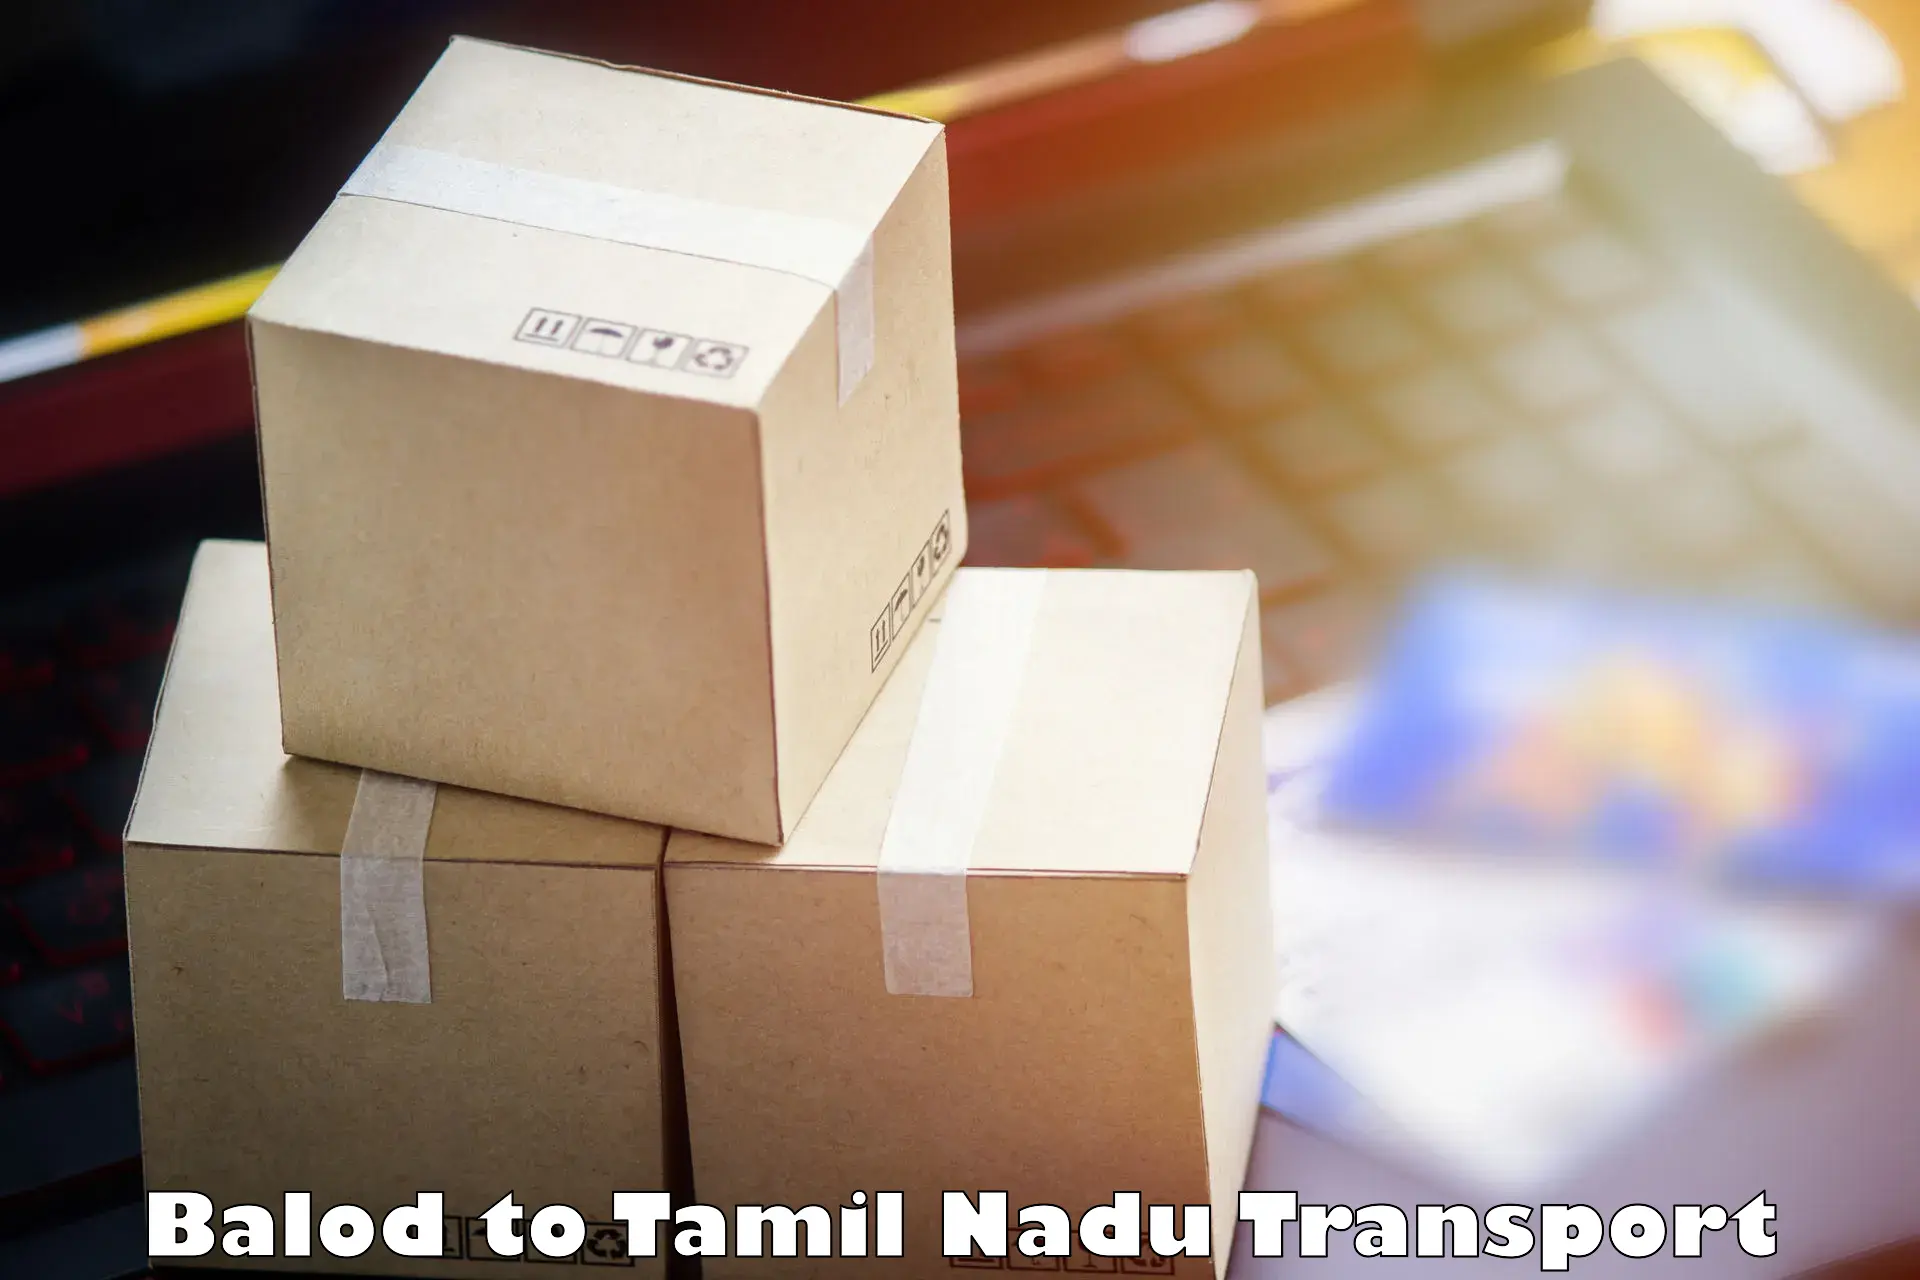 Furniture transport service Balod to Kodaikanal